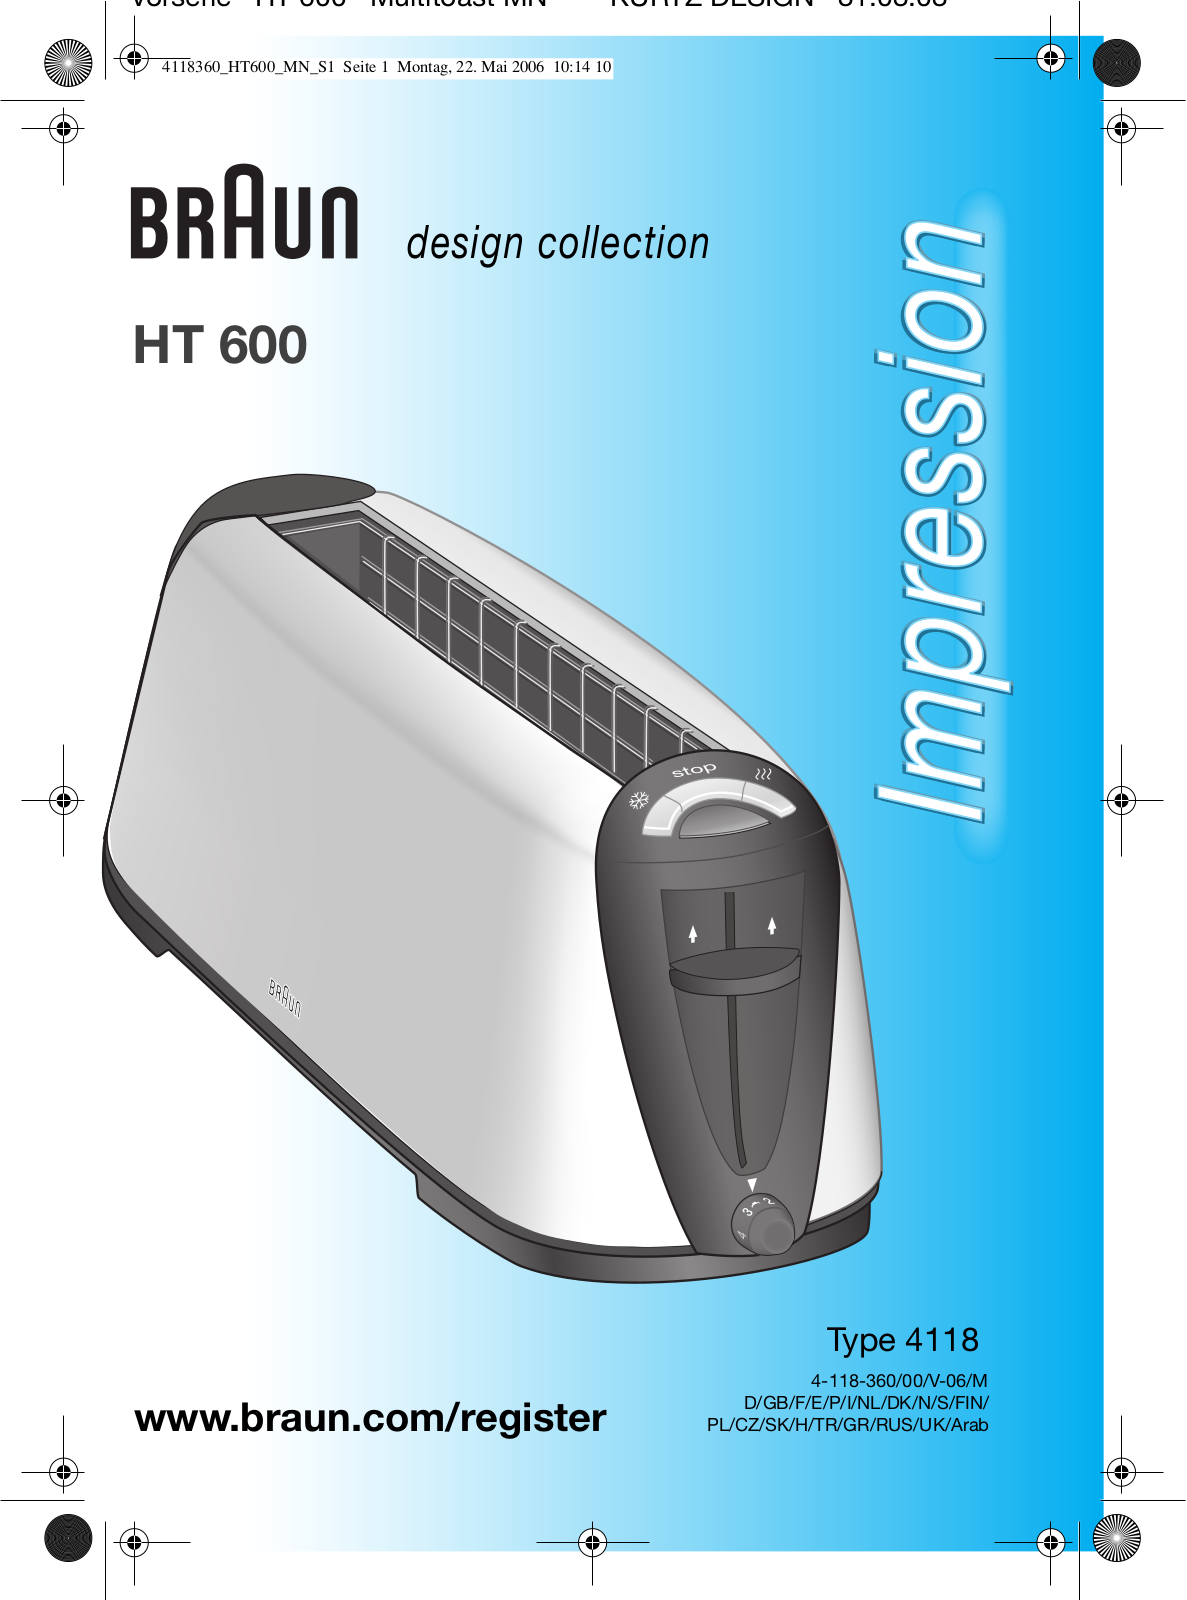 Braun Impression HT600, MutiToast HT600 Owner's Manual